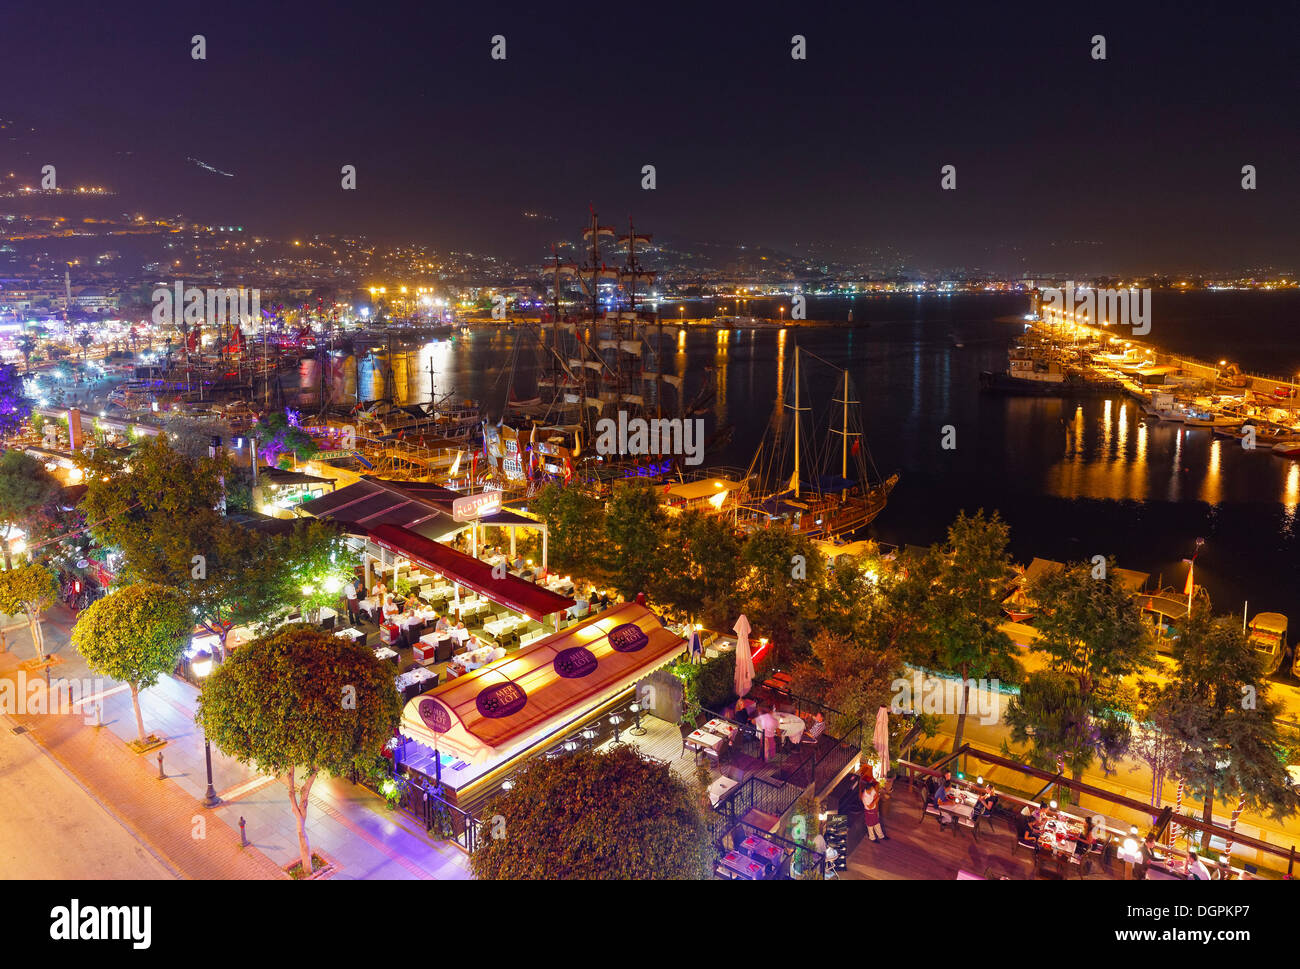 Restaurants at the harbour at night, Alanya, Turkish Riviera, Province of Antalya, Mediterranean Region, Turkey Stock Photo